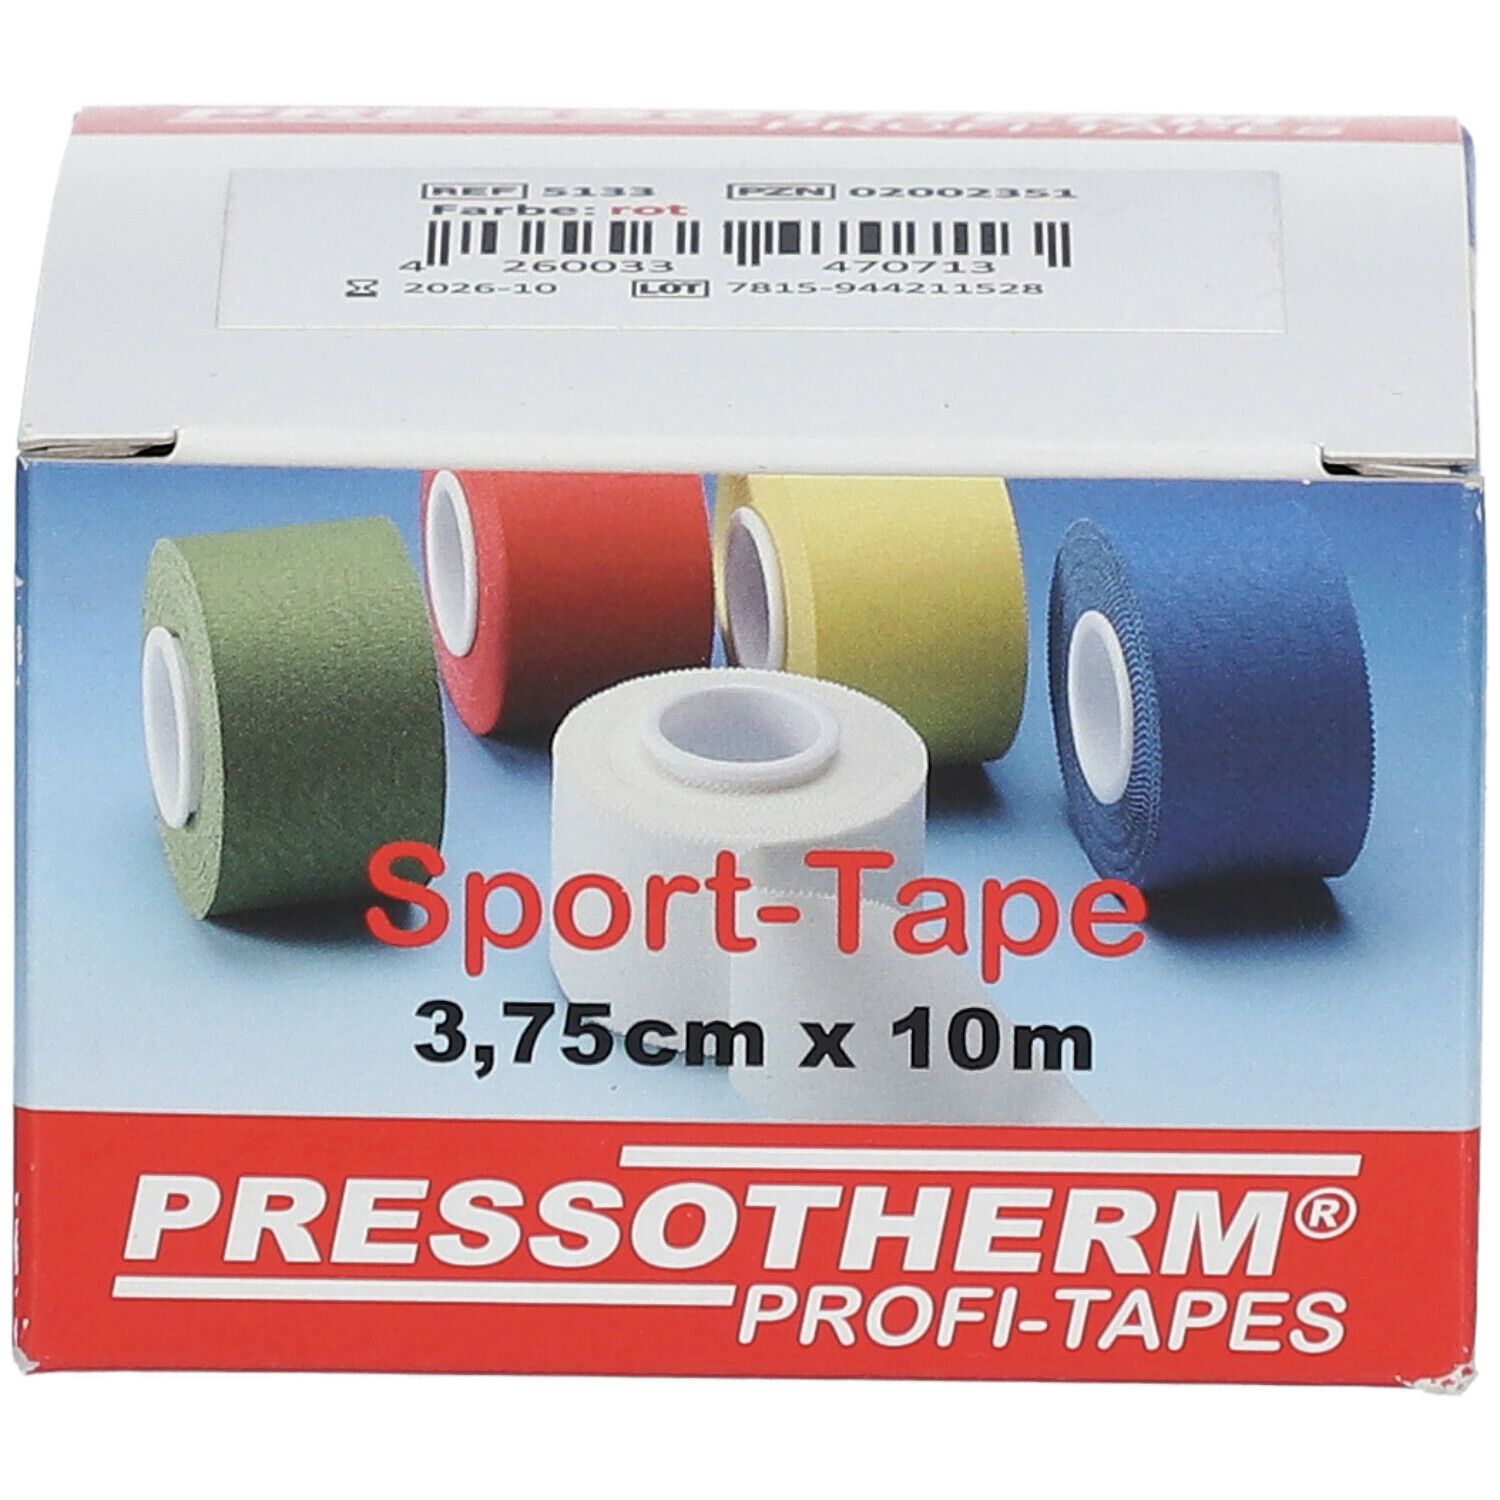 Pressotherm® Sport-Tape 3,8 cm x 10 m rot